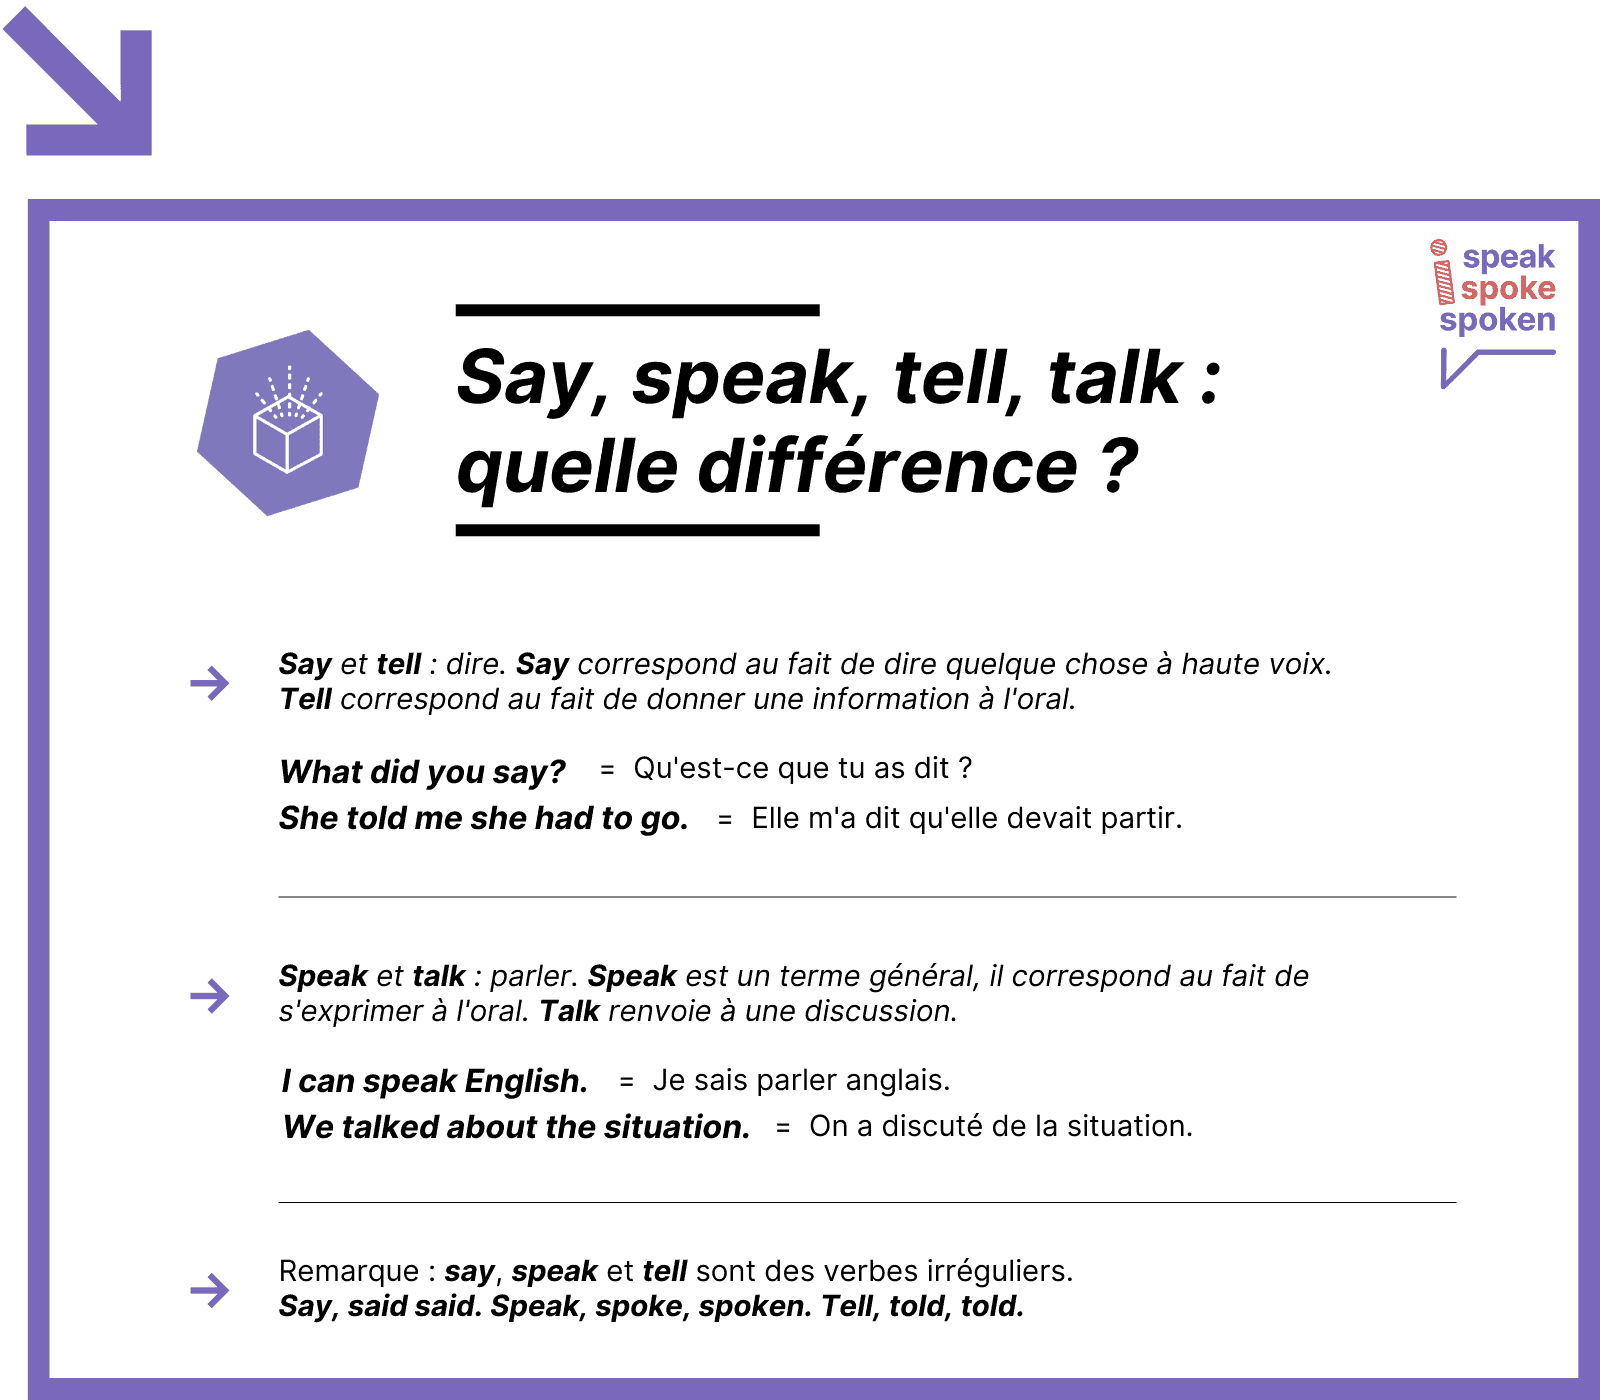 La différence entre say, speak, tell et talk